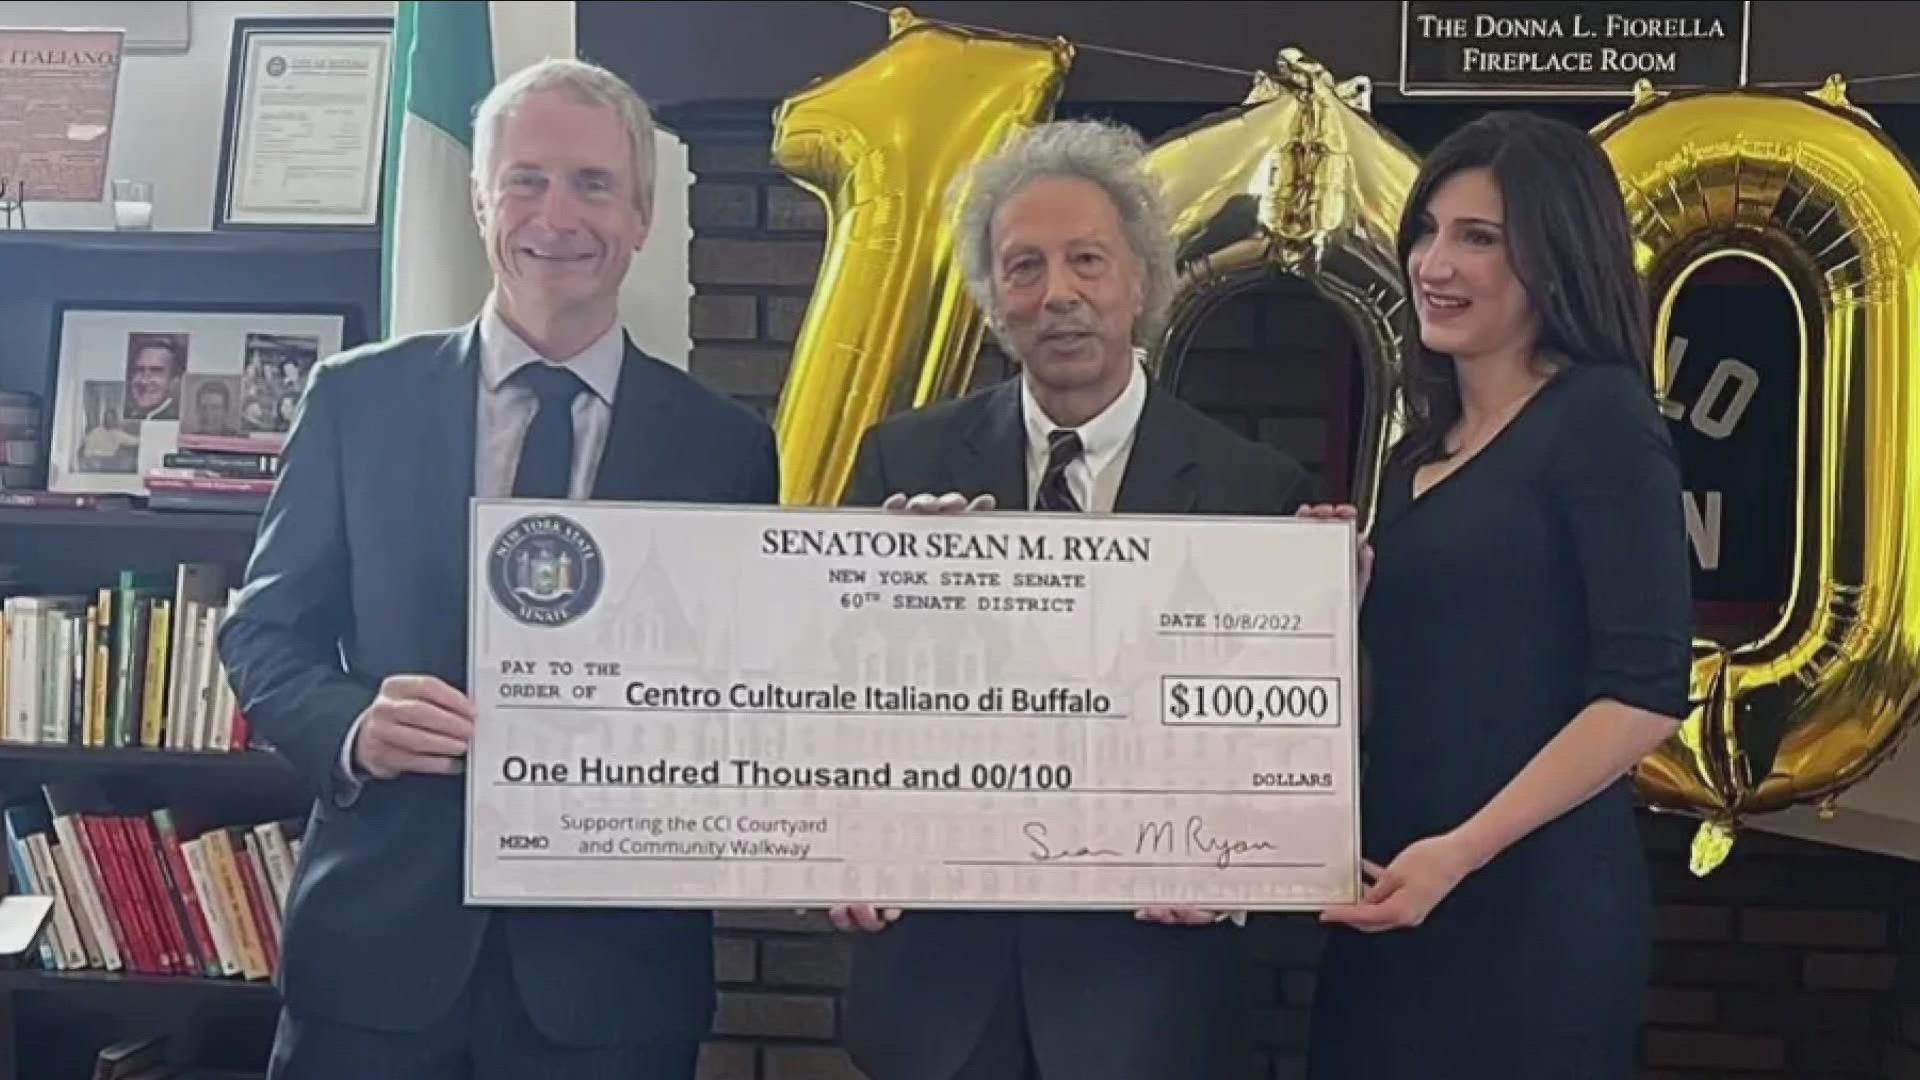 Senator Ryan presented a check for $100,000 to Executive Director John Vecchio and Deputy Director Lindsey Lauren Visser at Centro Culturale Italiano di Buffalo.